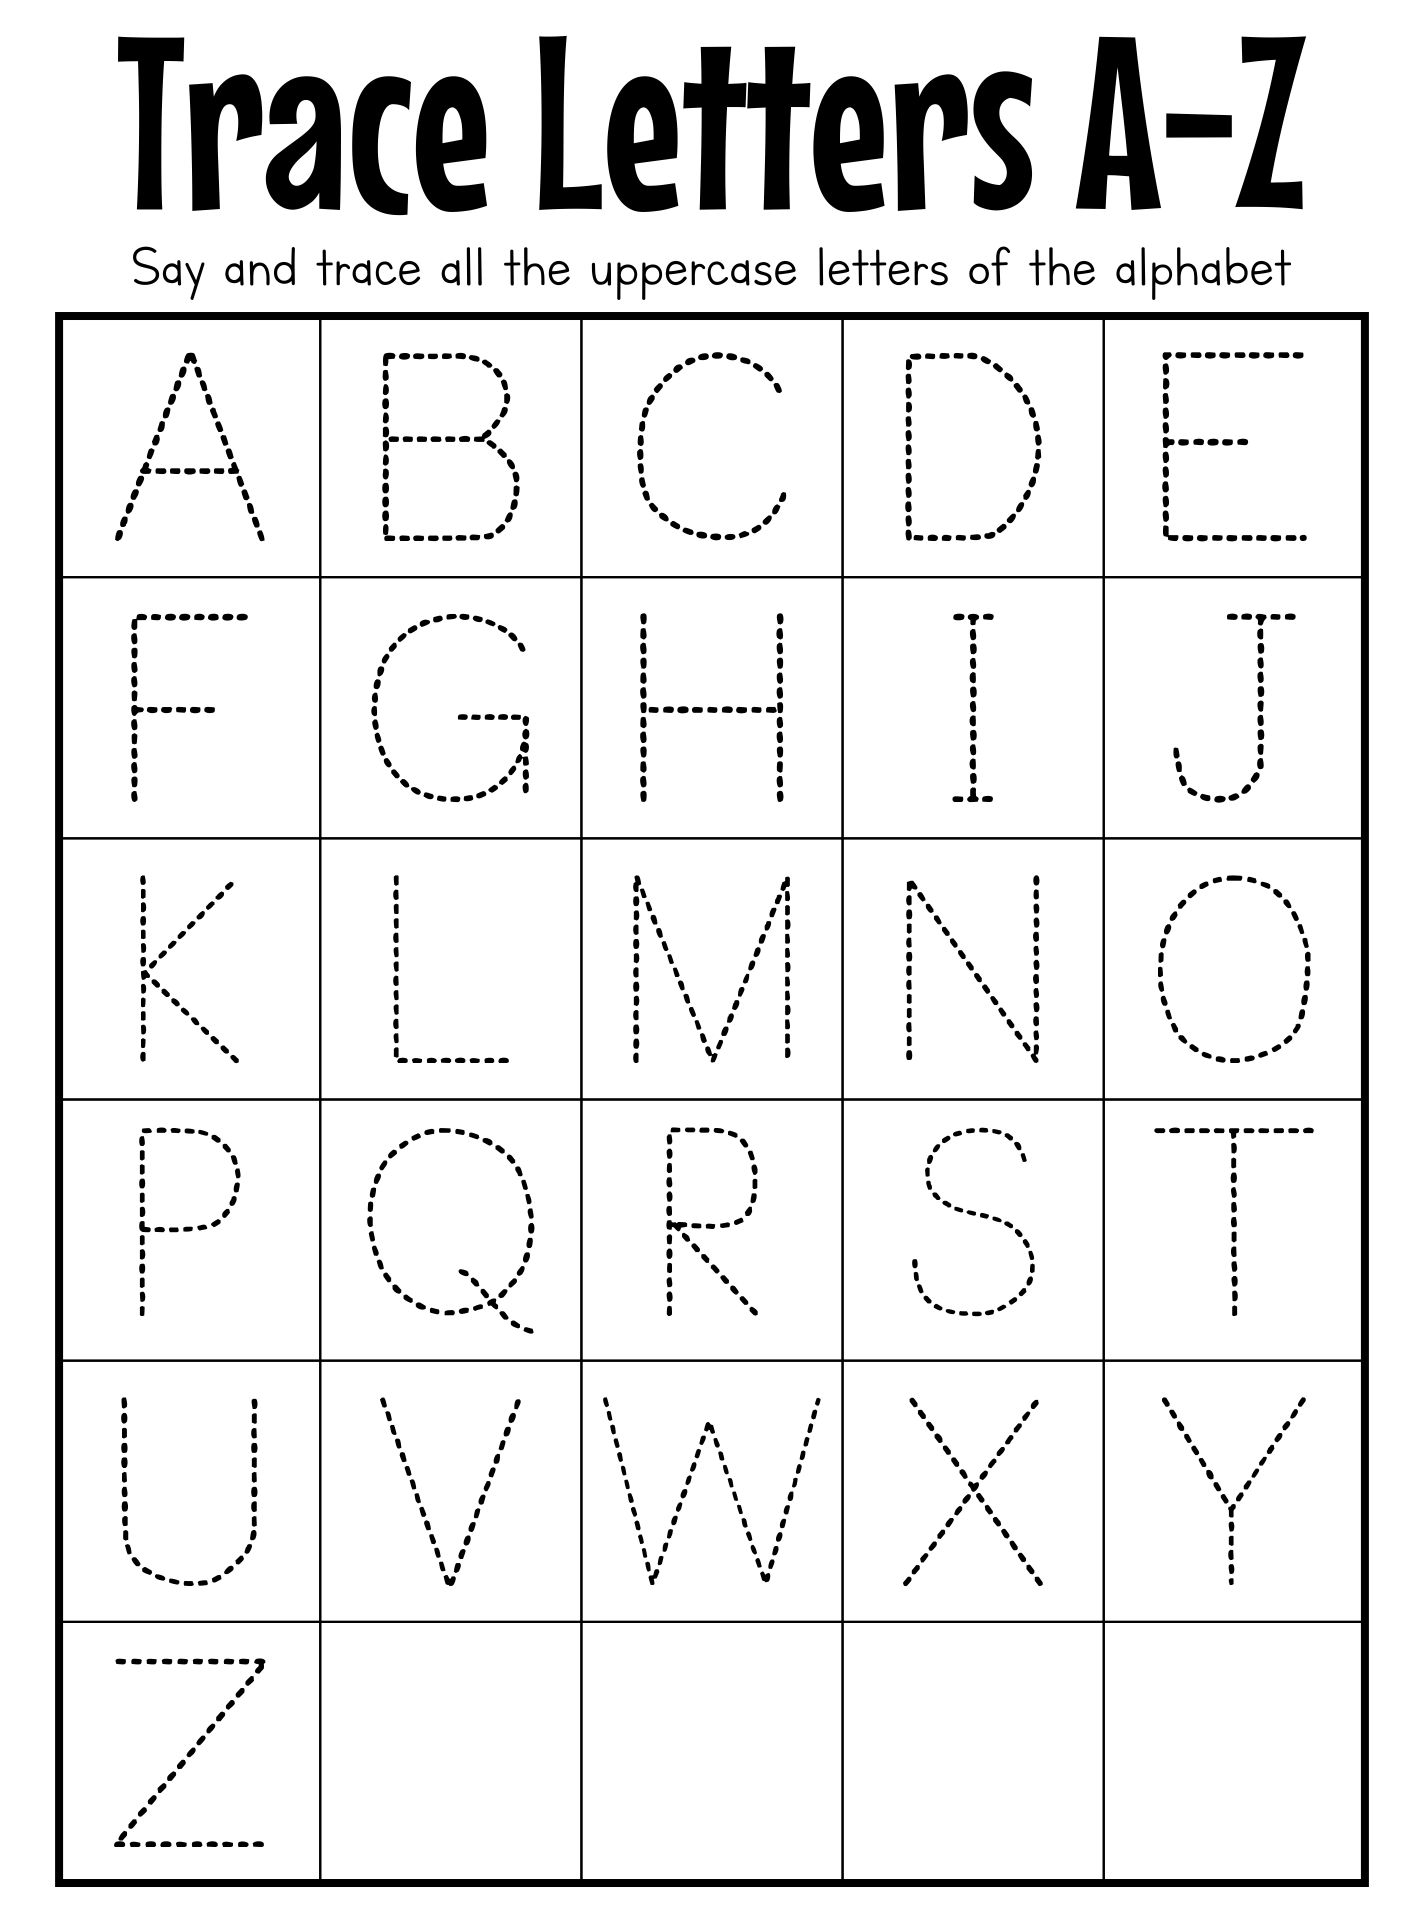 Traceable Alphabet Worksheets - 10 Free PDF Printables | Printablee